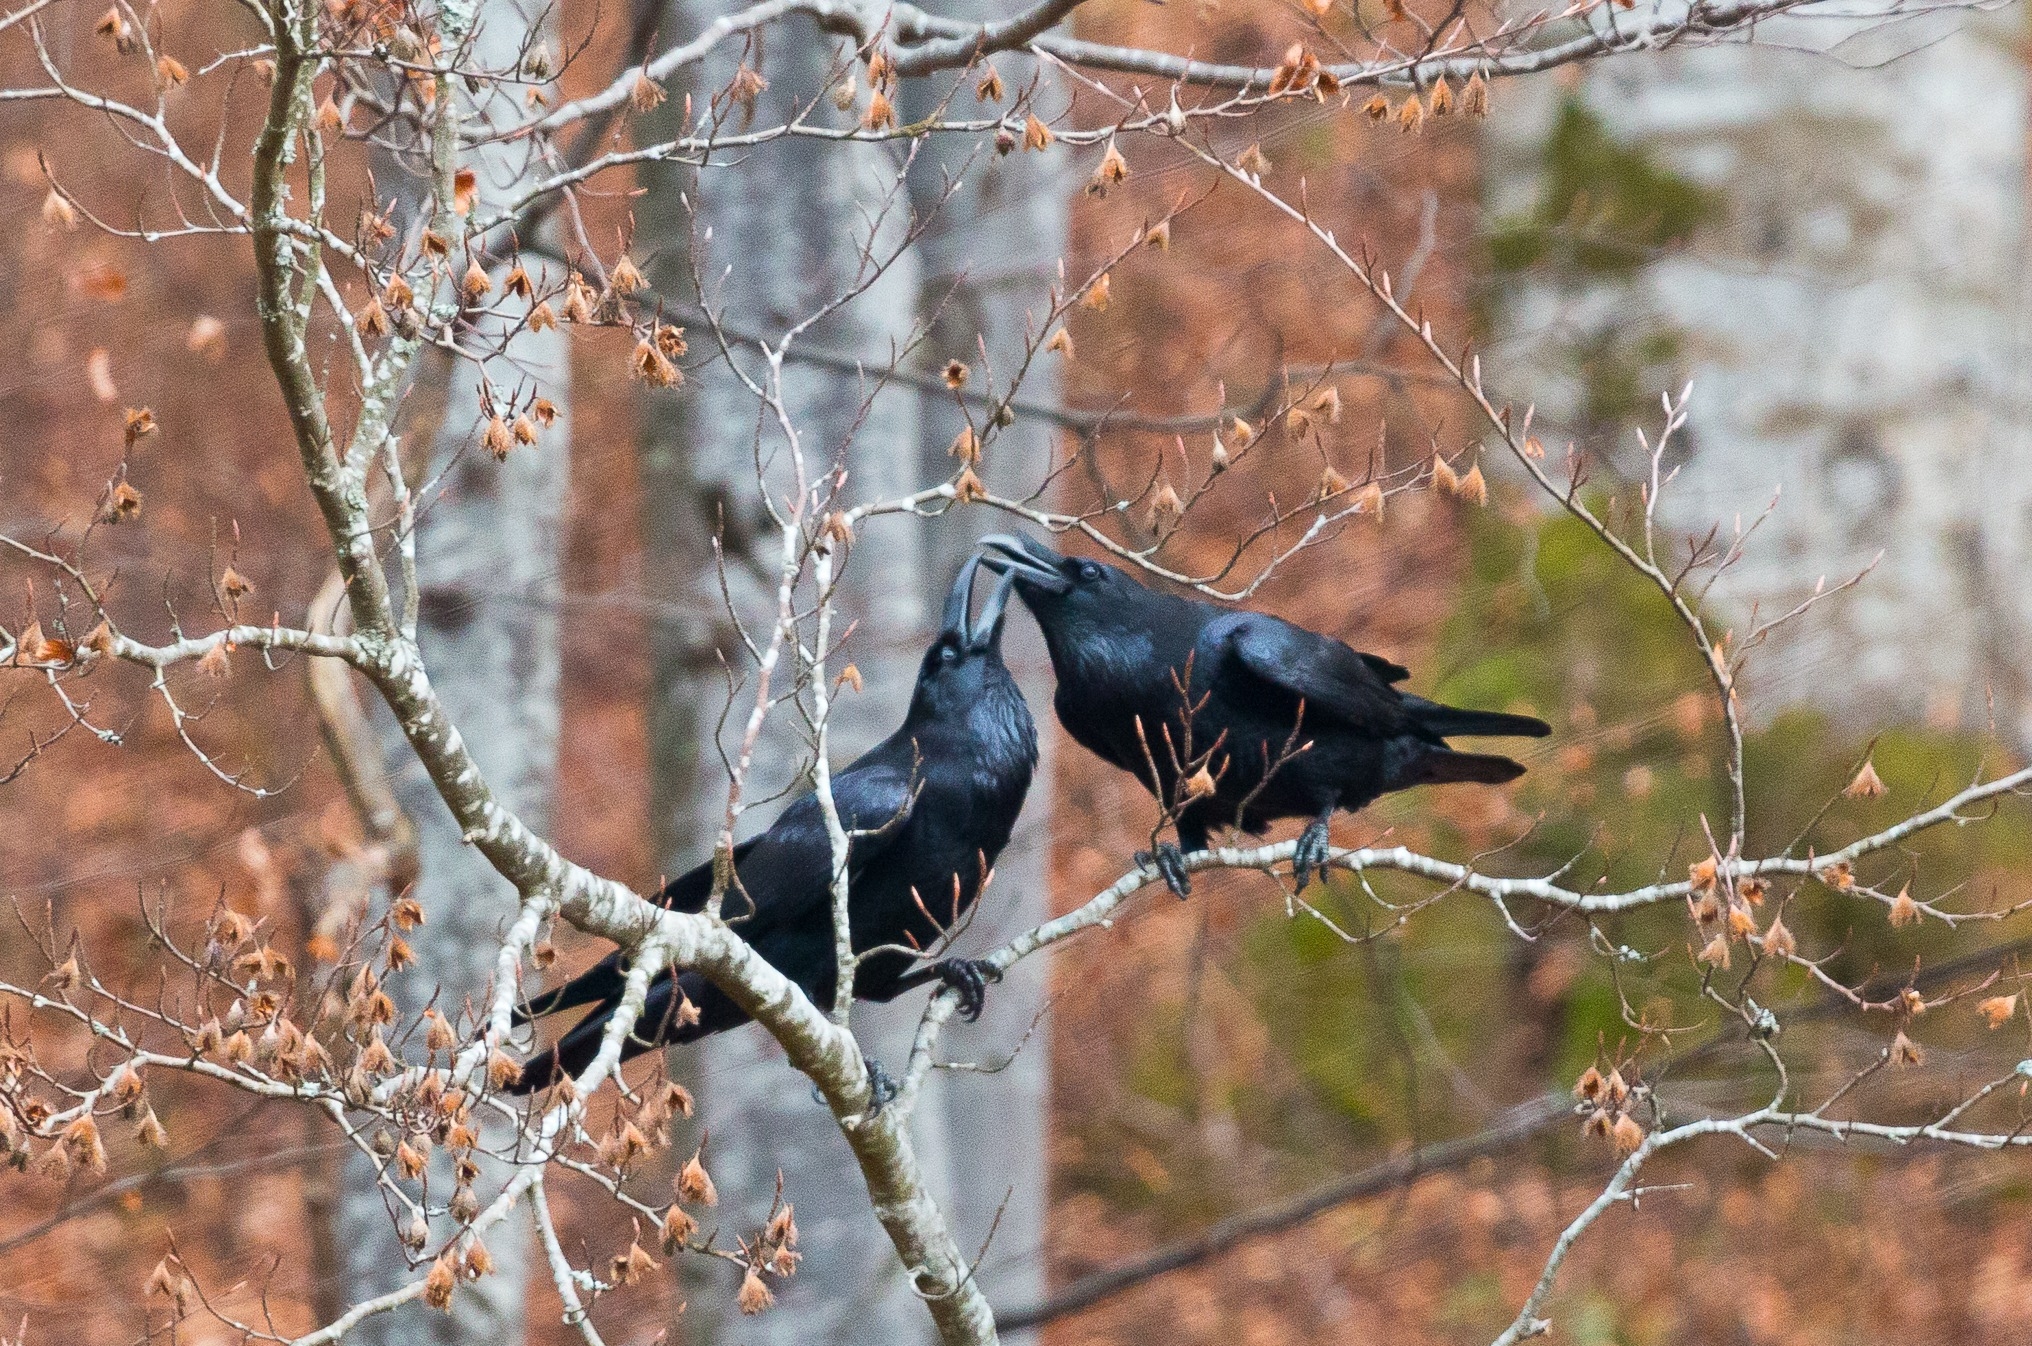 Pereche de corbi din Parcul Natural Bucegi ritual de împerechere